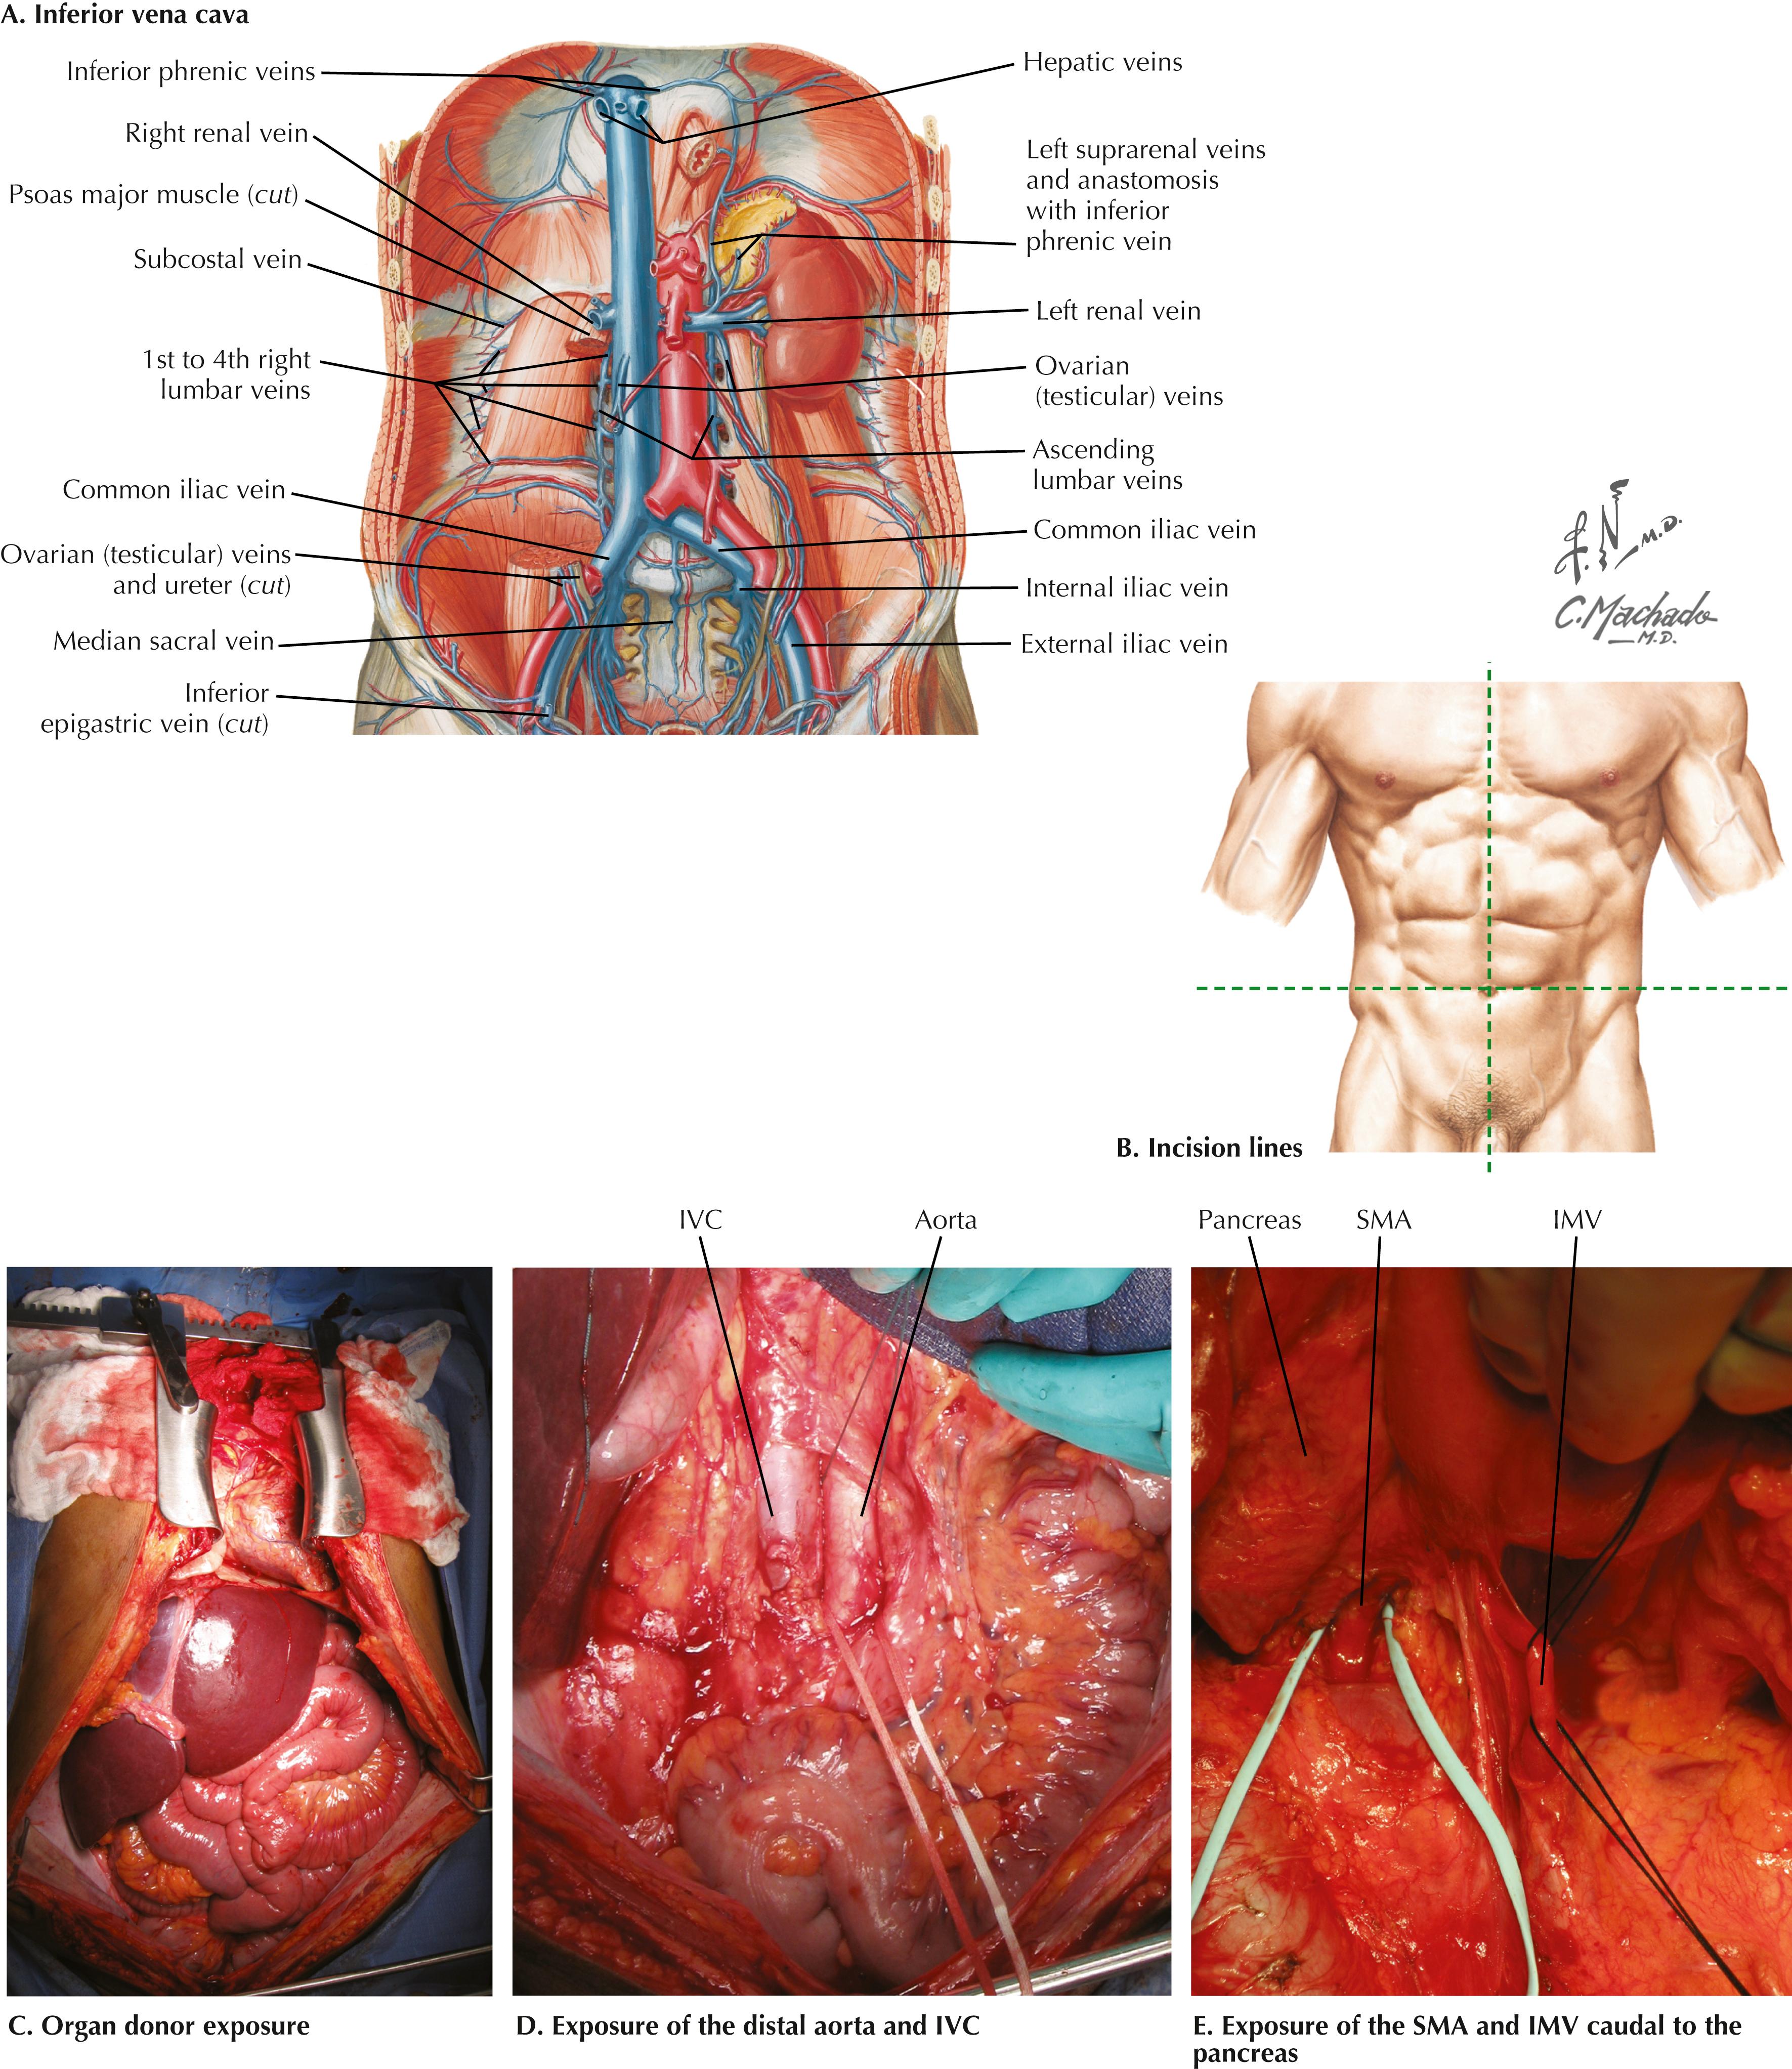 FIGURE 24.1, Abdominal anatomy and organ procurement exposures.